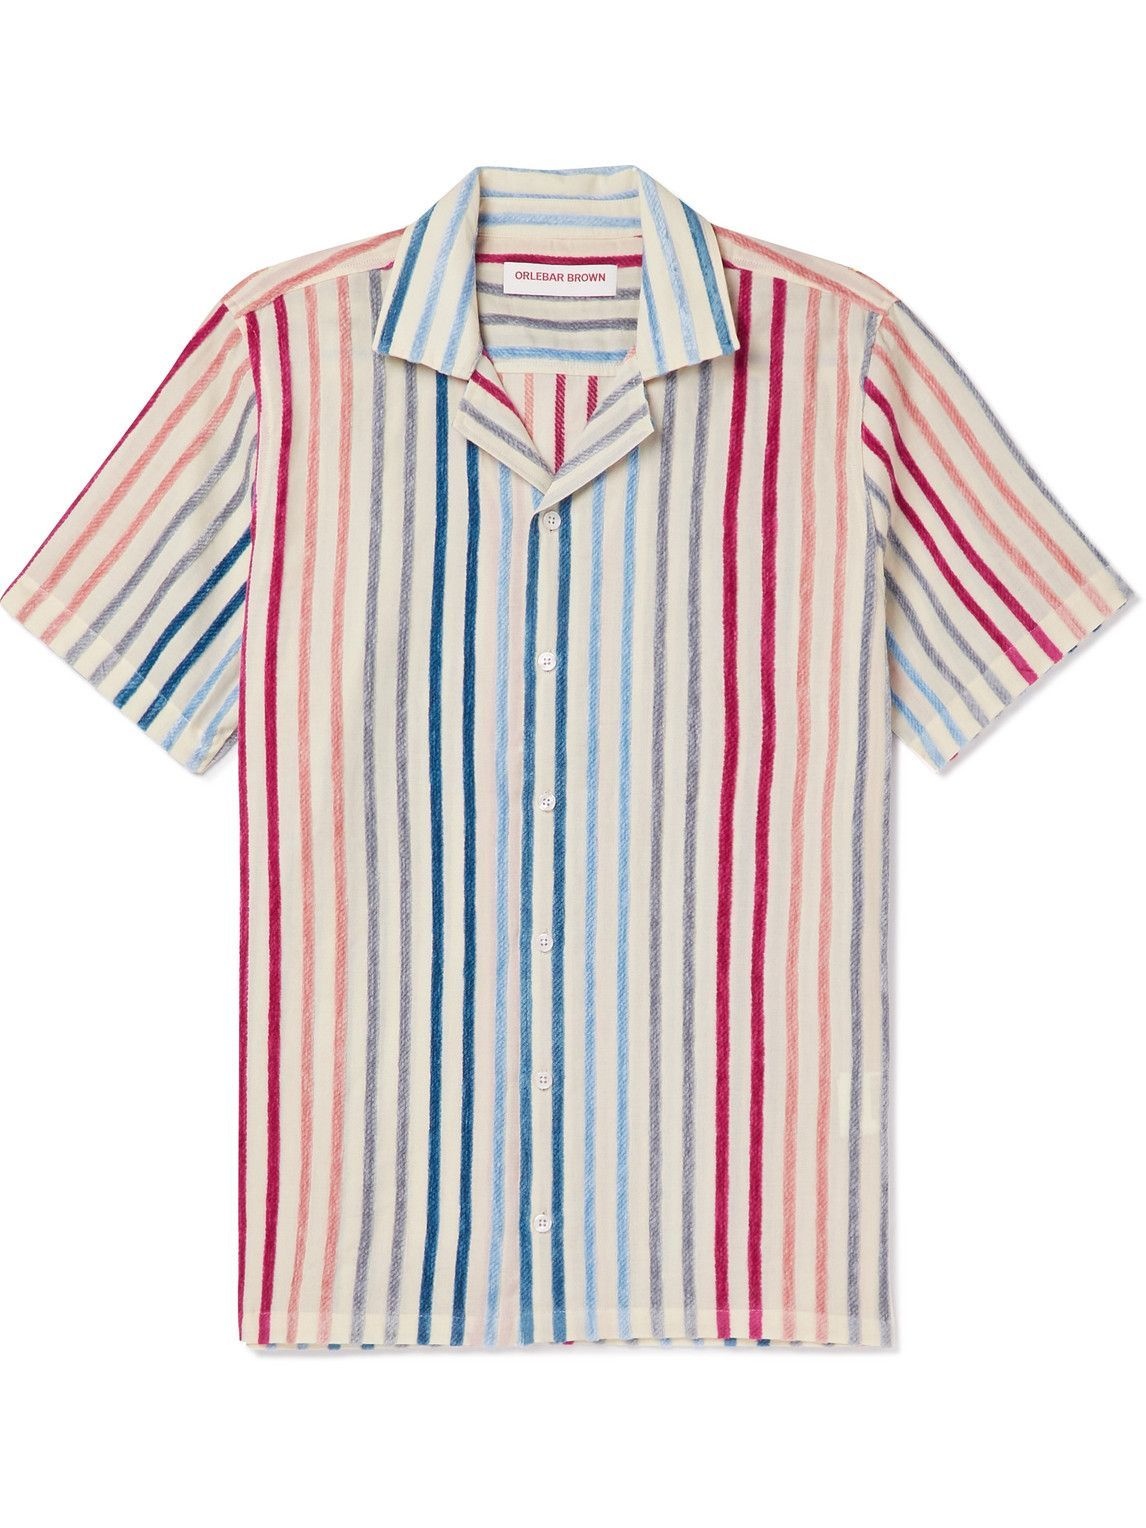 Orlebar Brown - Hibbert Striped Chenille Shirt - Blue Orlebar Brown